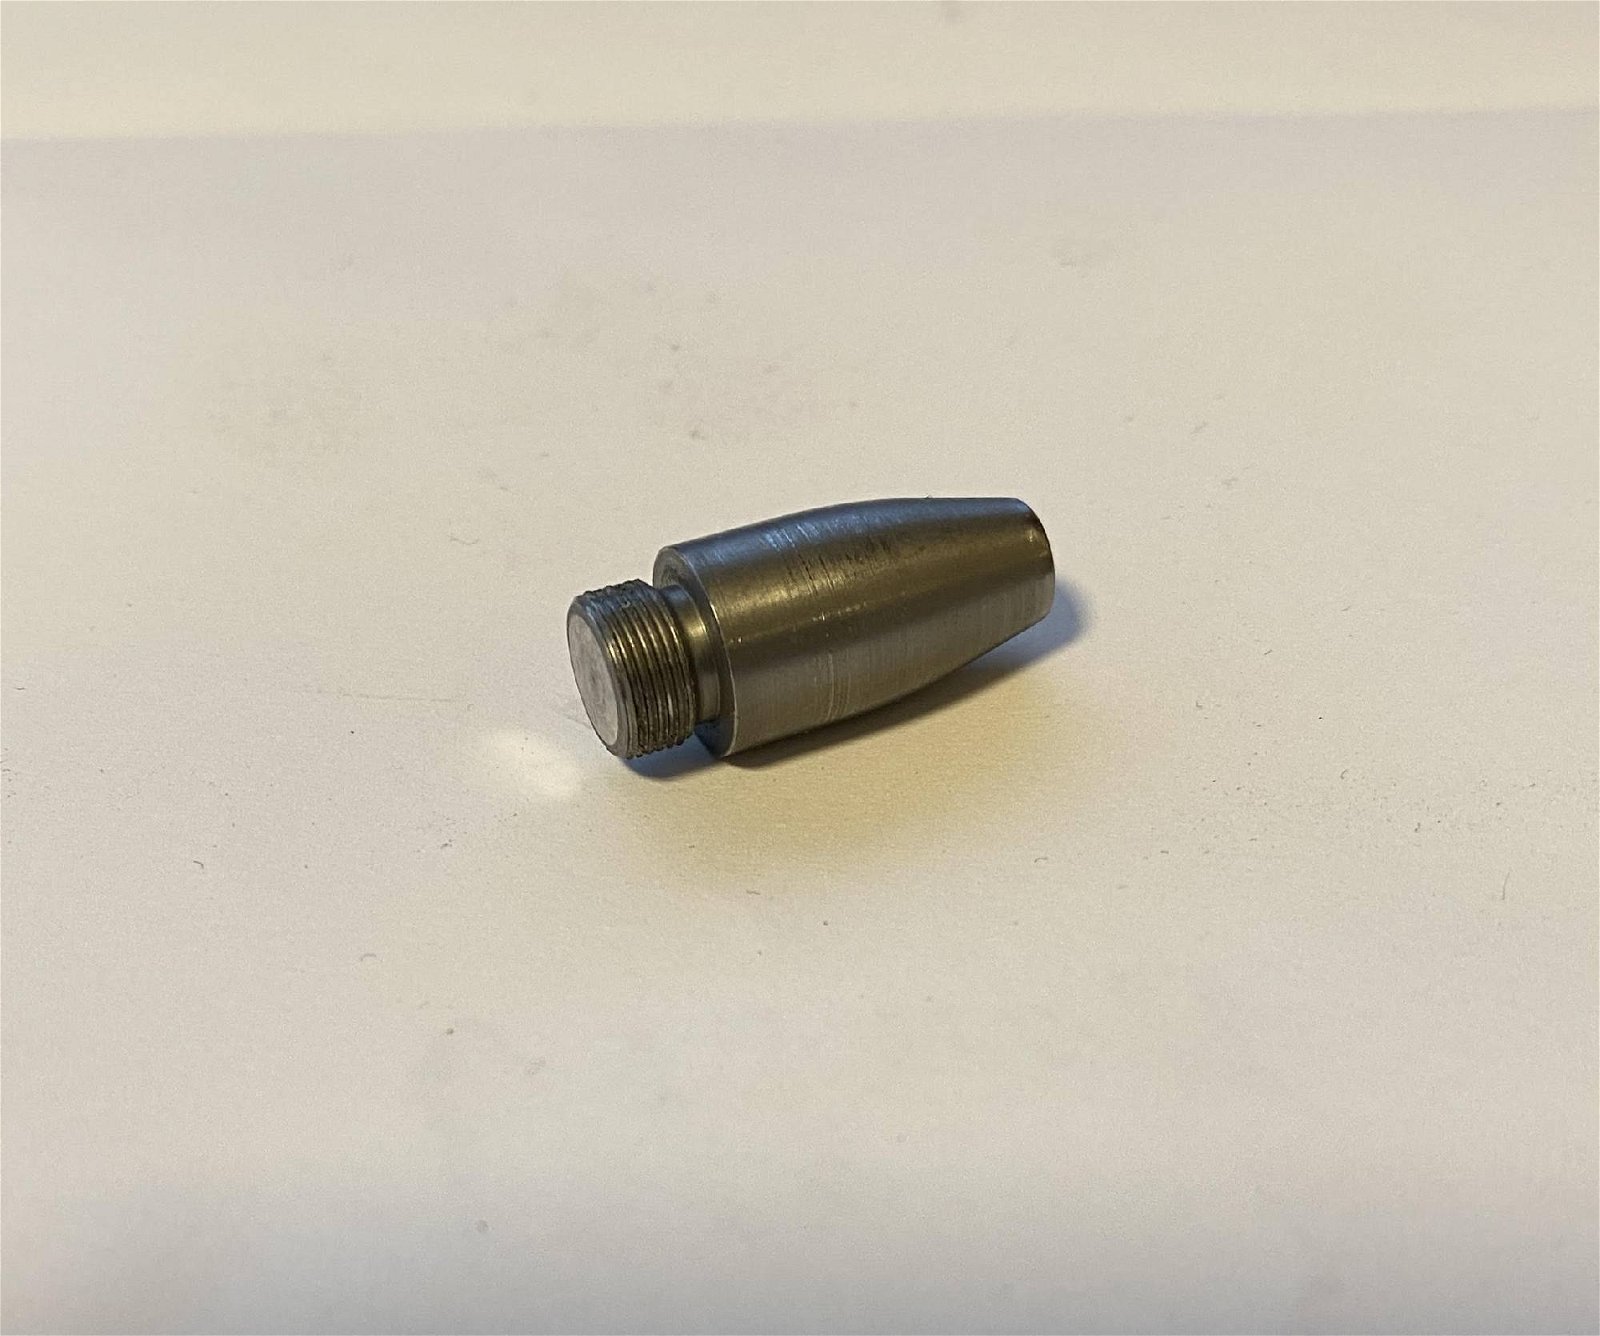 Cane Creek HELM tool oil sealhead bullet